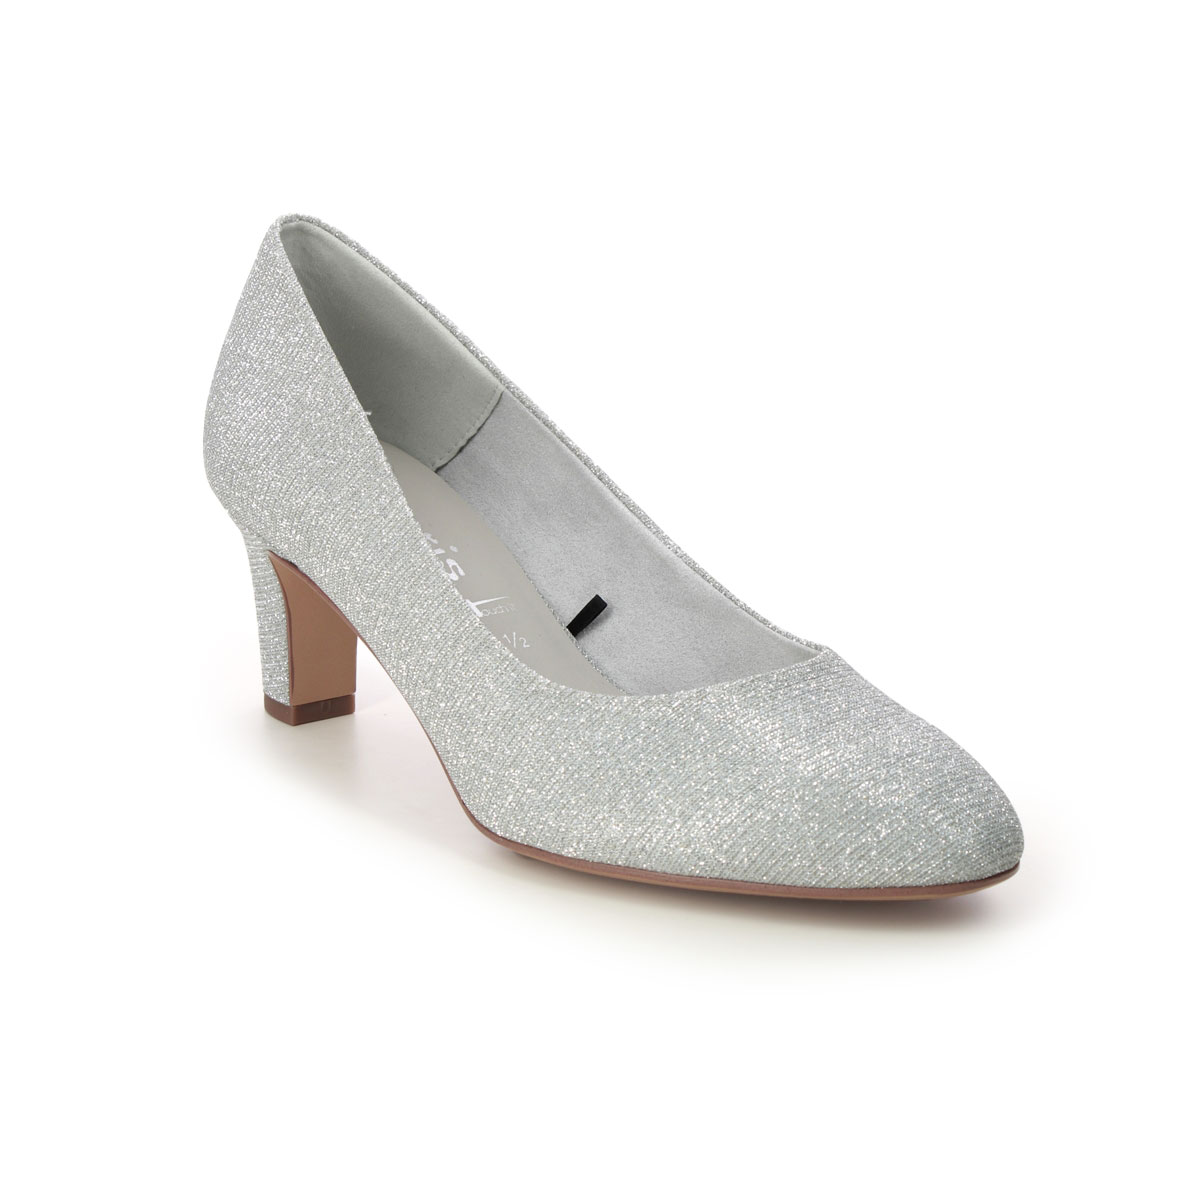 Tamaris Daenerys Silver Glitz Womens Court Shoes 22418-41-9A9 in a Plain Textile in Size 38